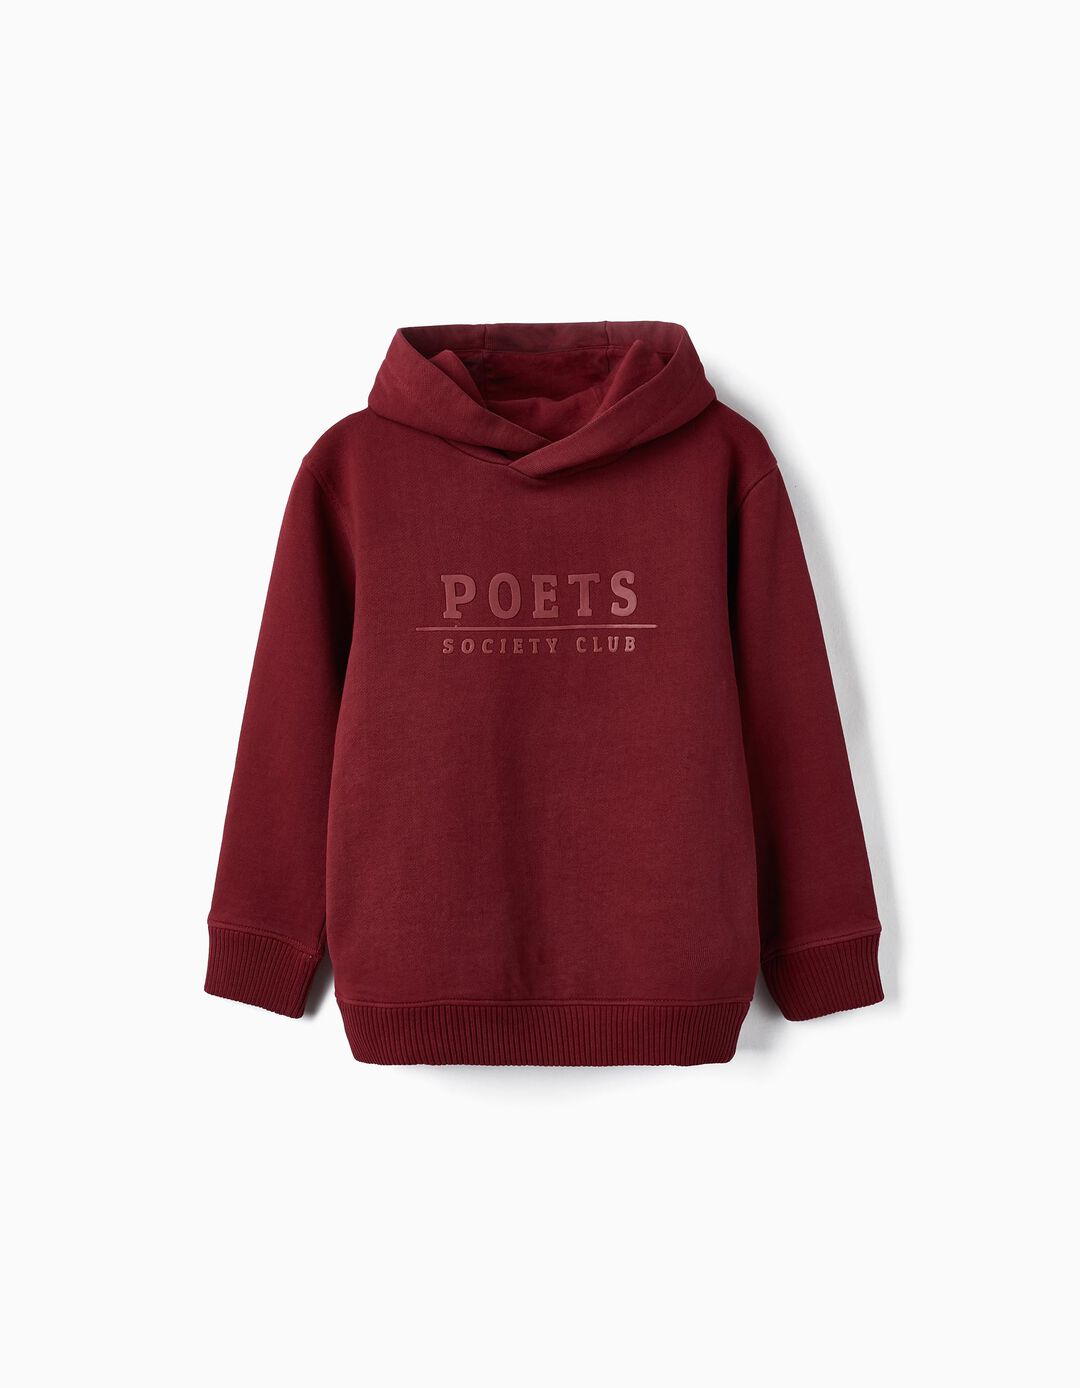 Hooded Sweatshirt in Cotton for Boys 'Poets Society Club', Burgundy